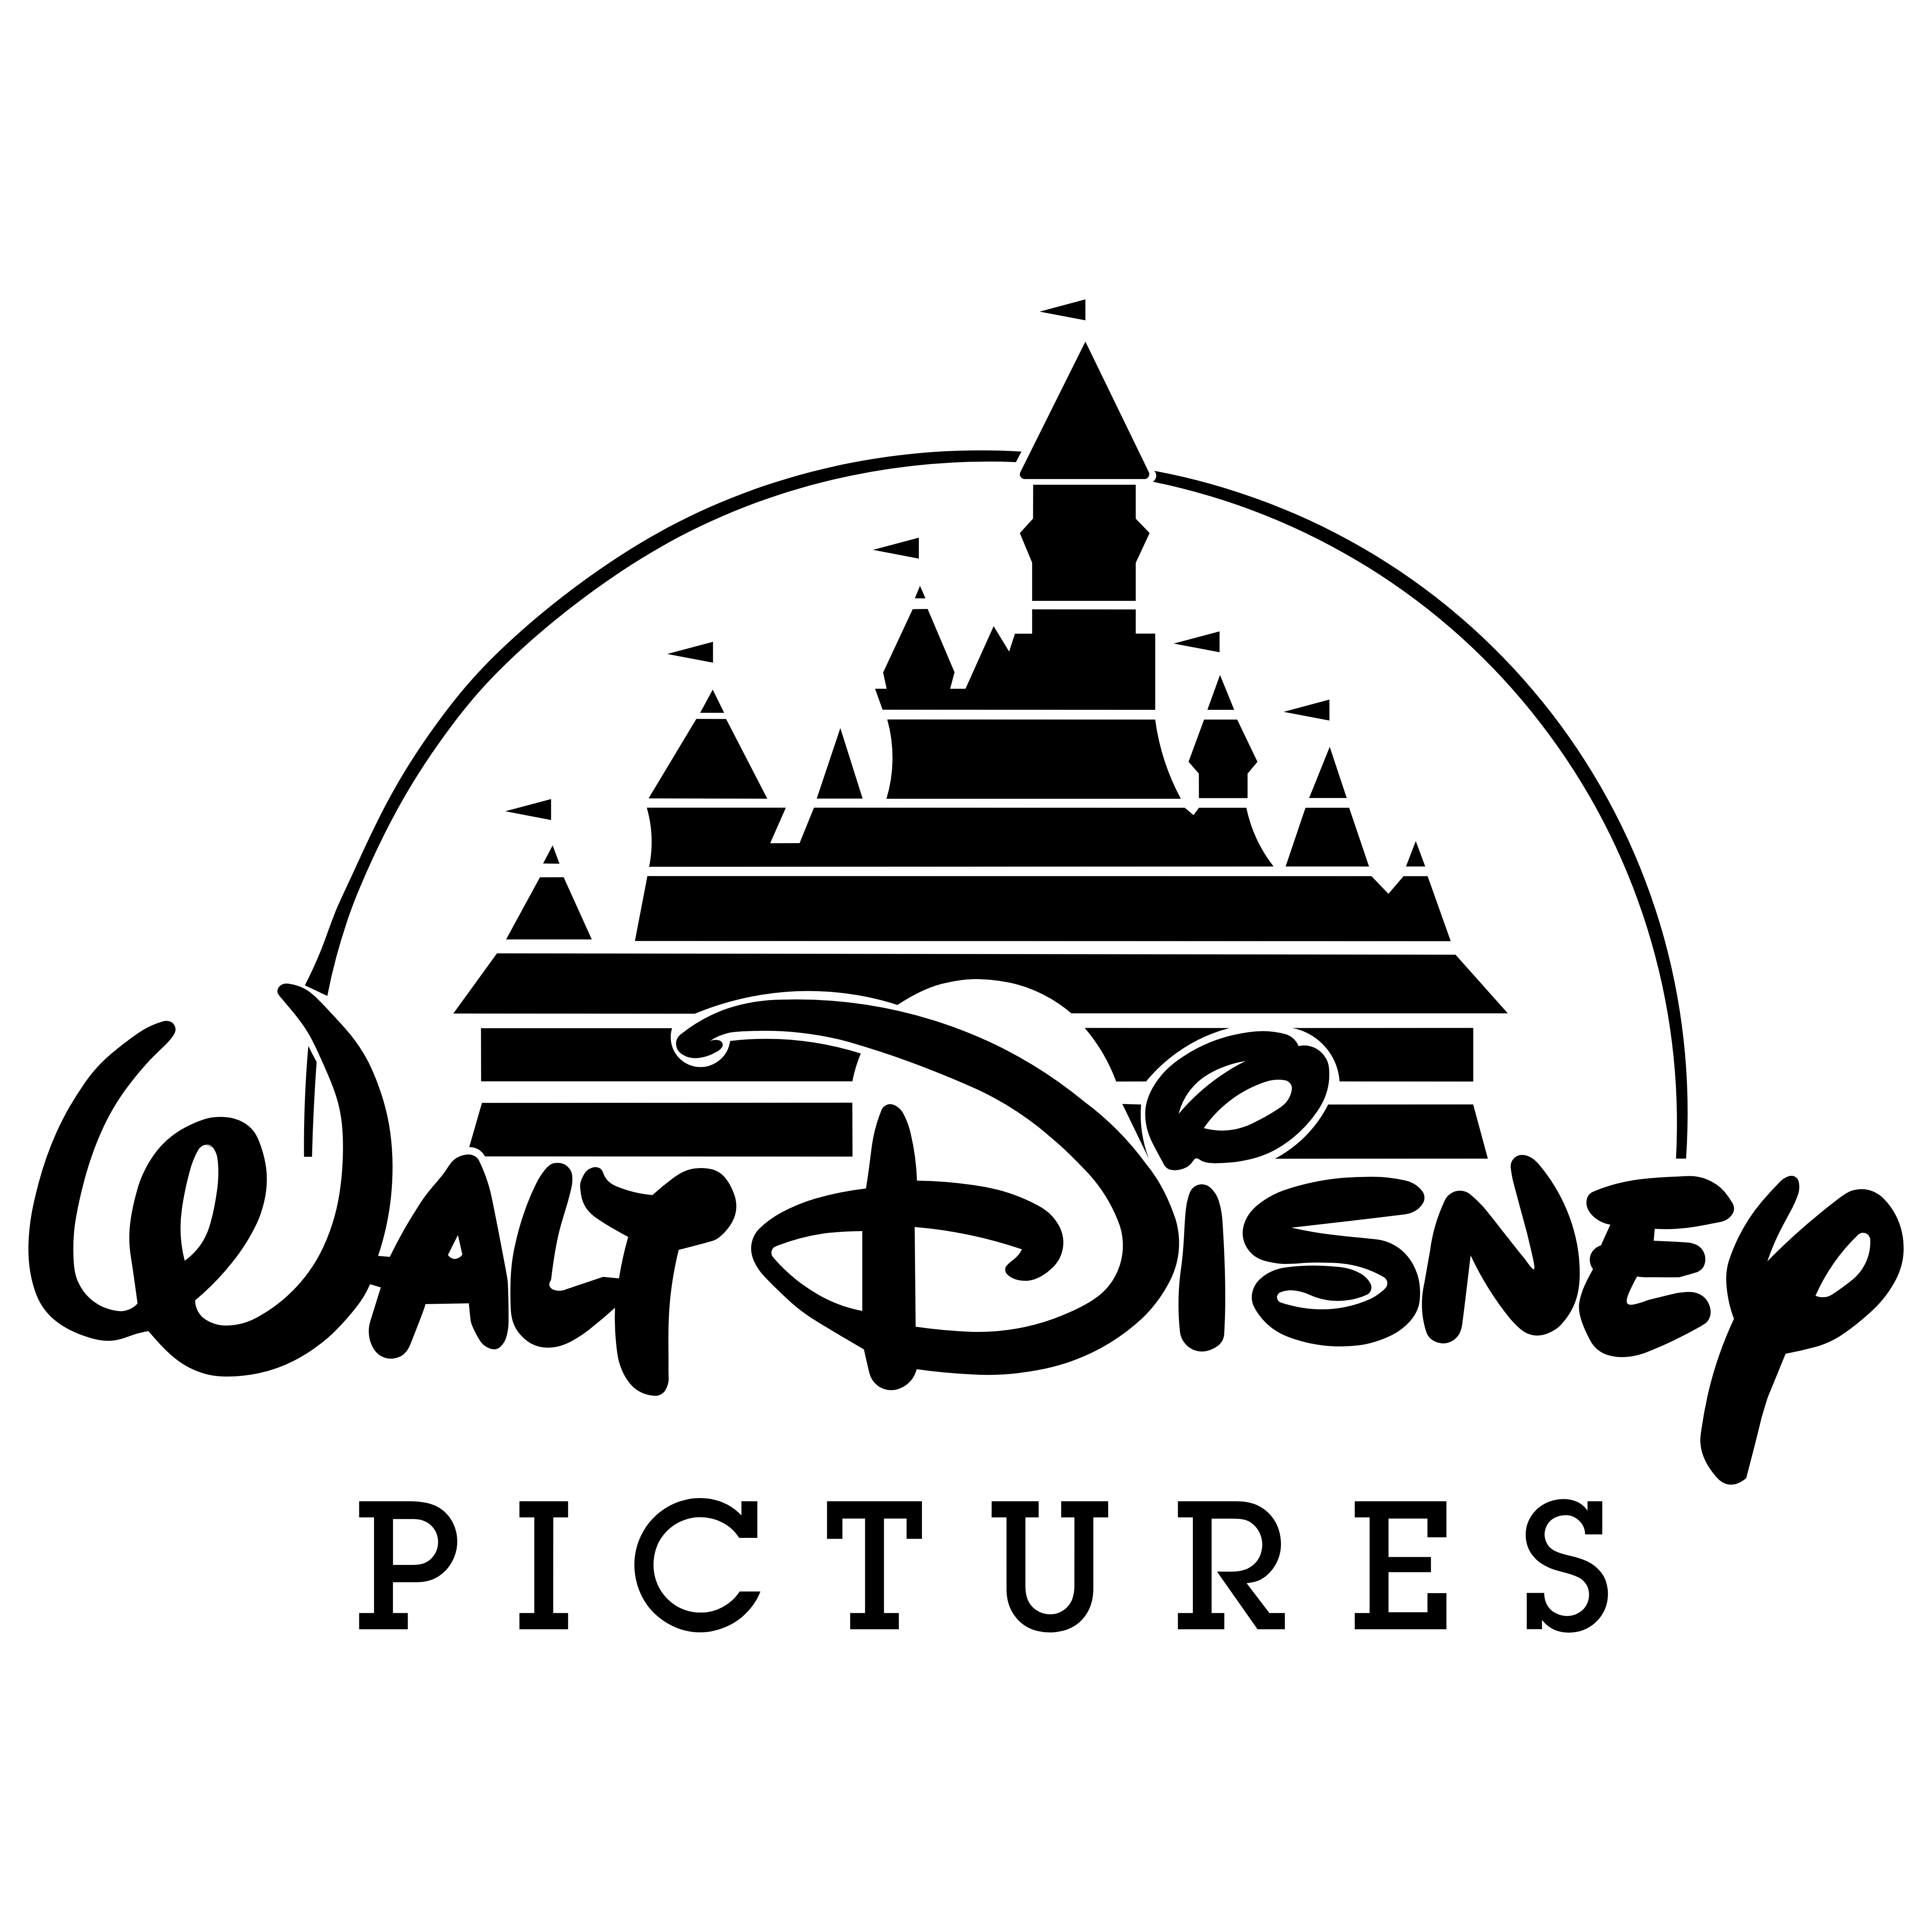 The Walt Disney – Logos Download